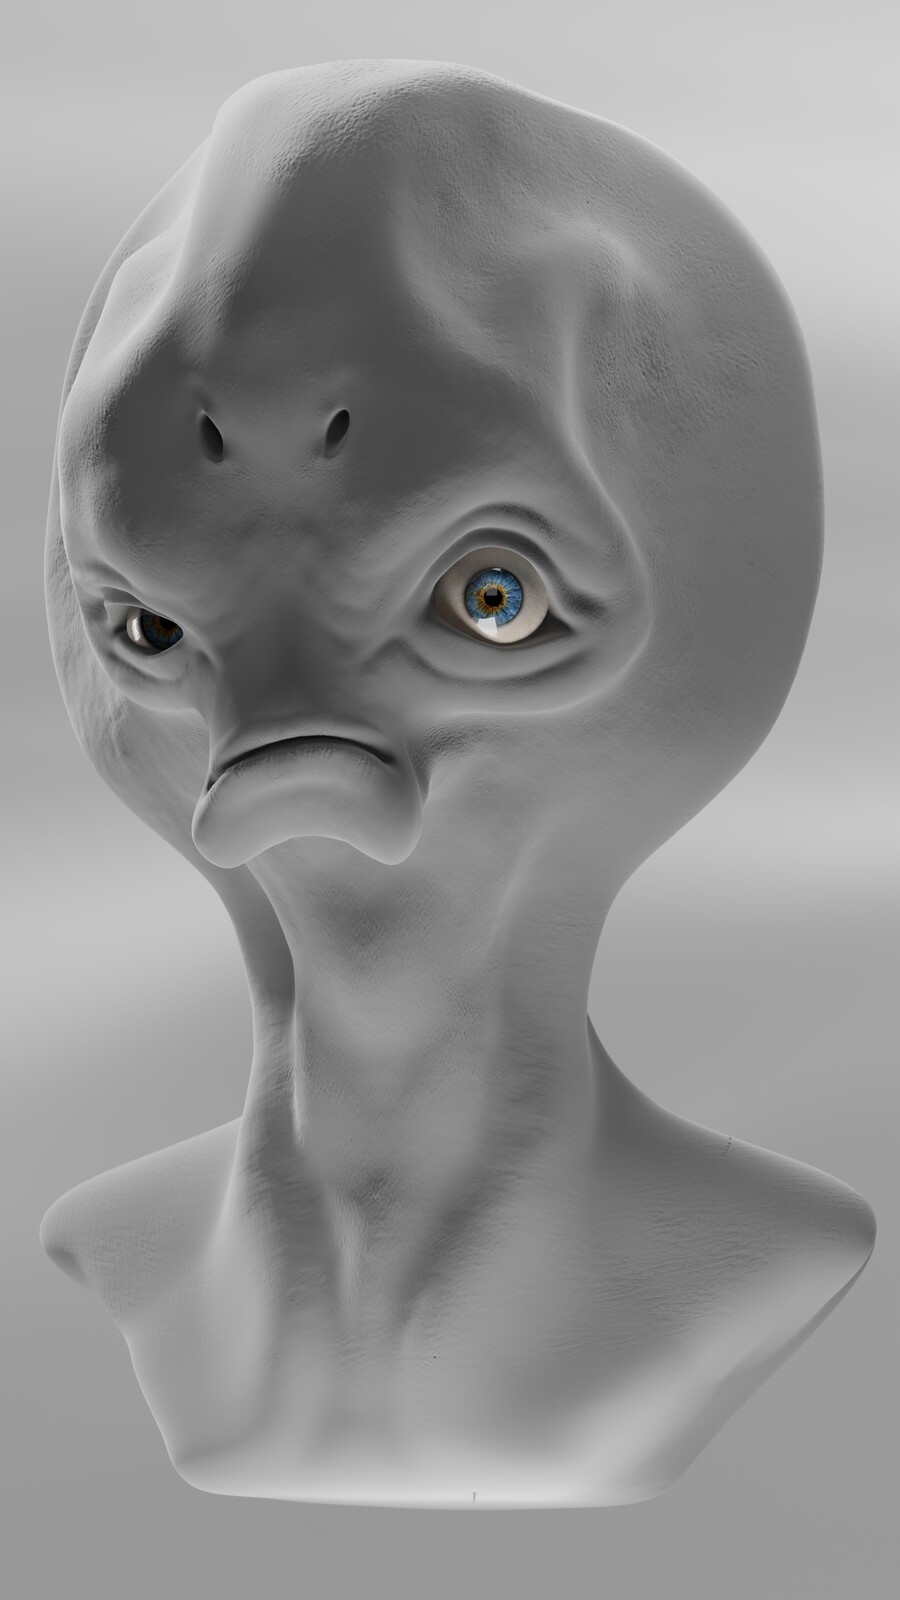 Alien Concept : "Roge-32"